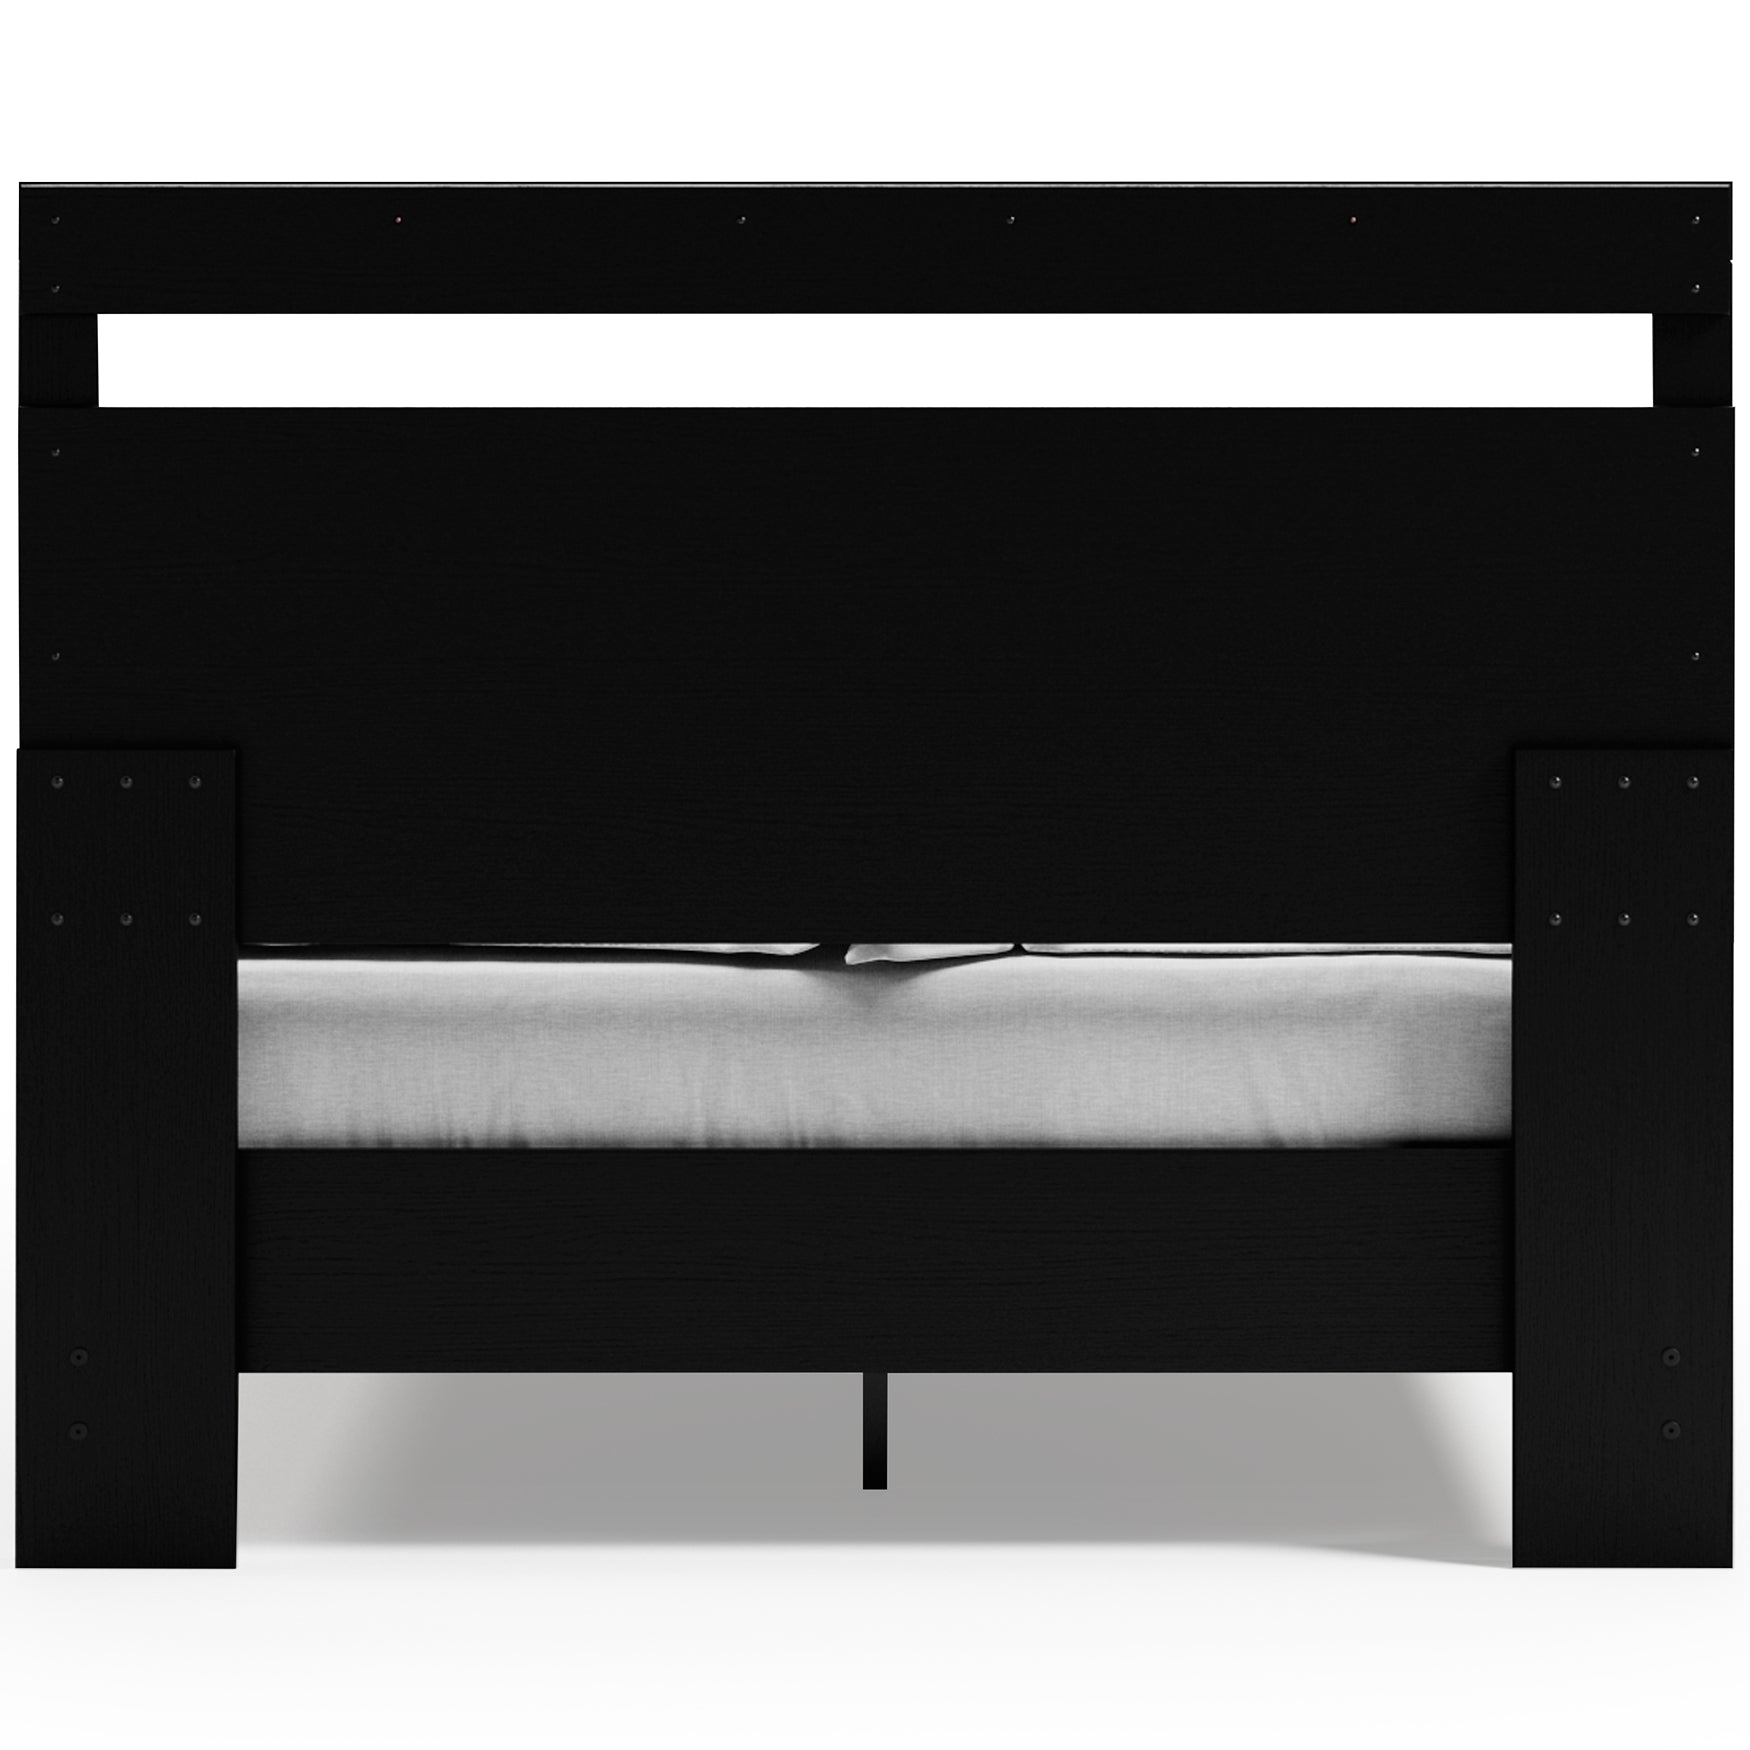 Finch Queen Panel Platform Bed JB's Furniture  Home Furniture, Home Decor, Furniture Store